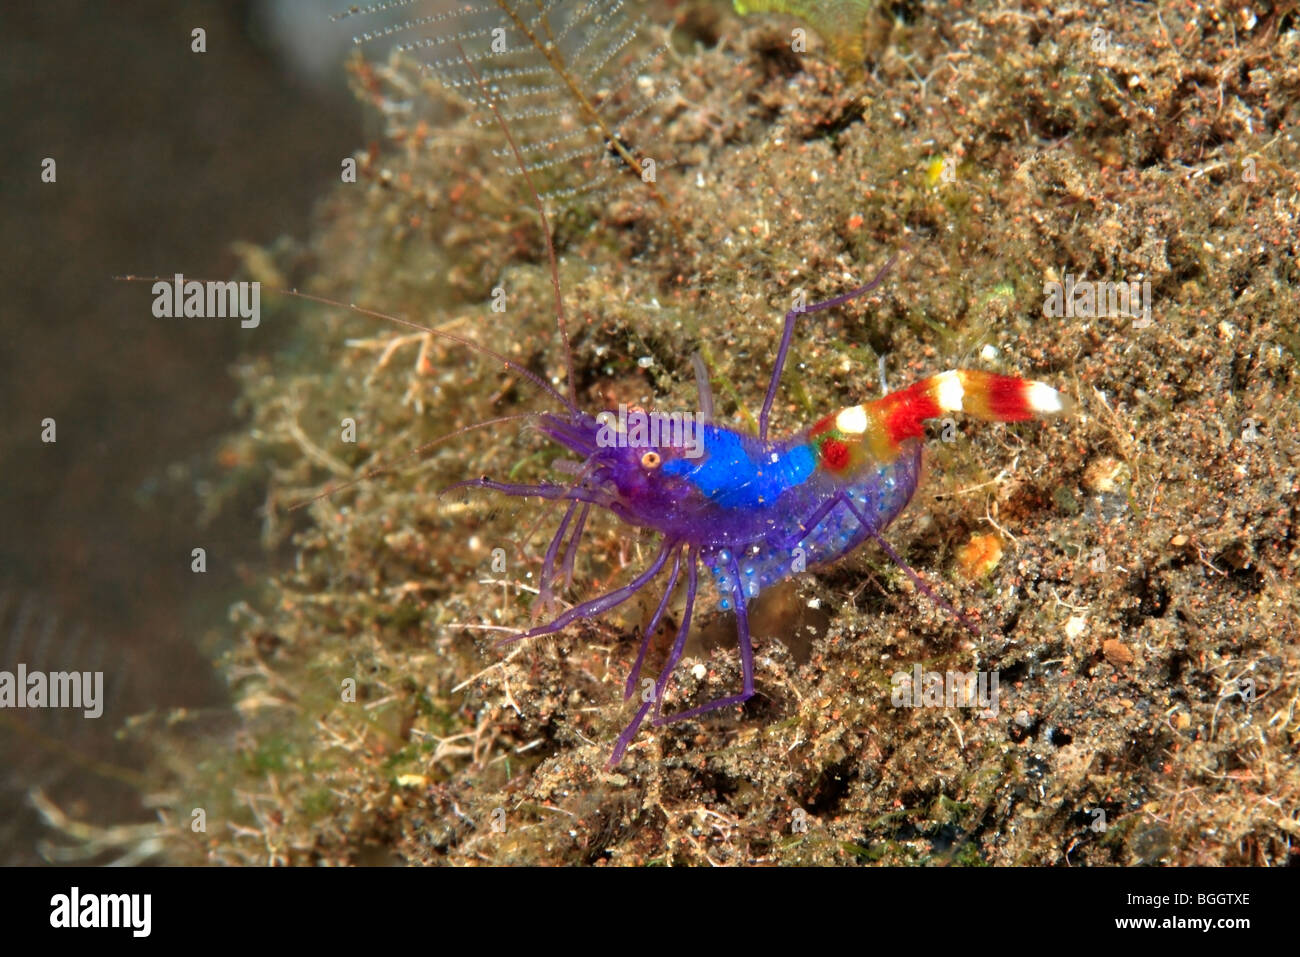 Female Blue Boxer Shrimp, or Blue Banded Coral Shrimp, Stenopus tenuirostris. This shrimp is carrying eggs Stock Photo